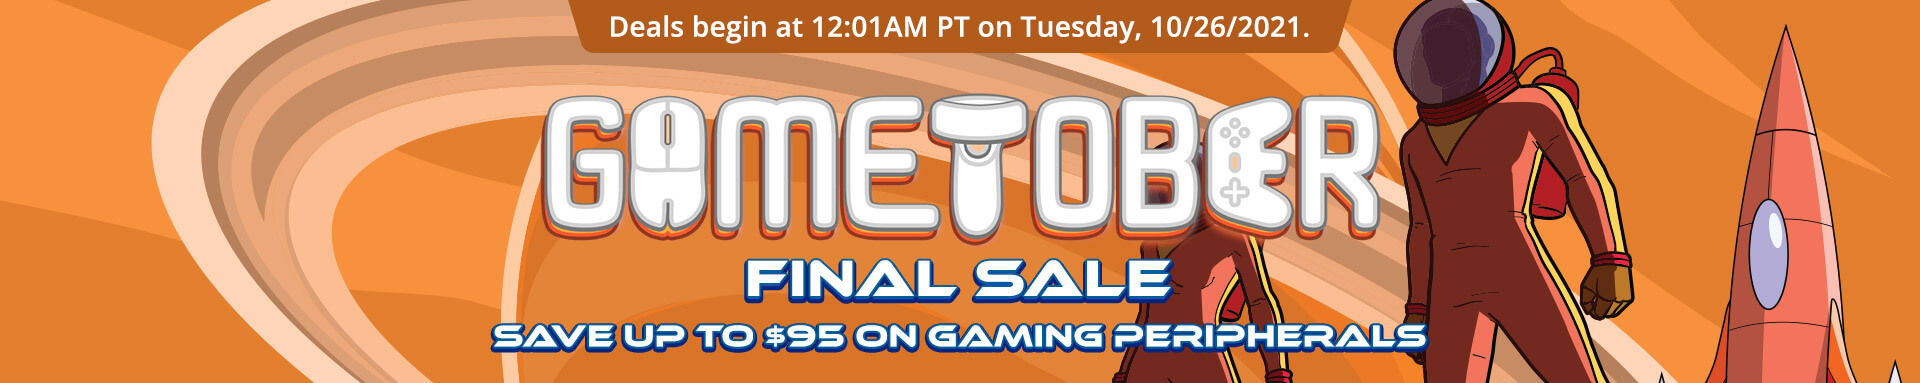 Gametober Final Sale